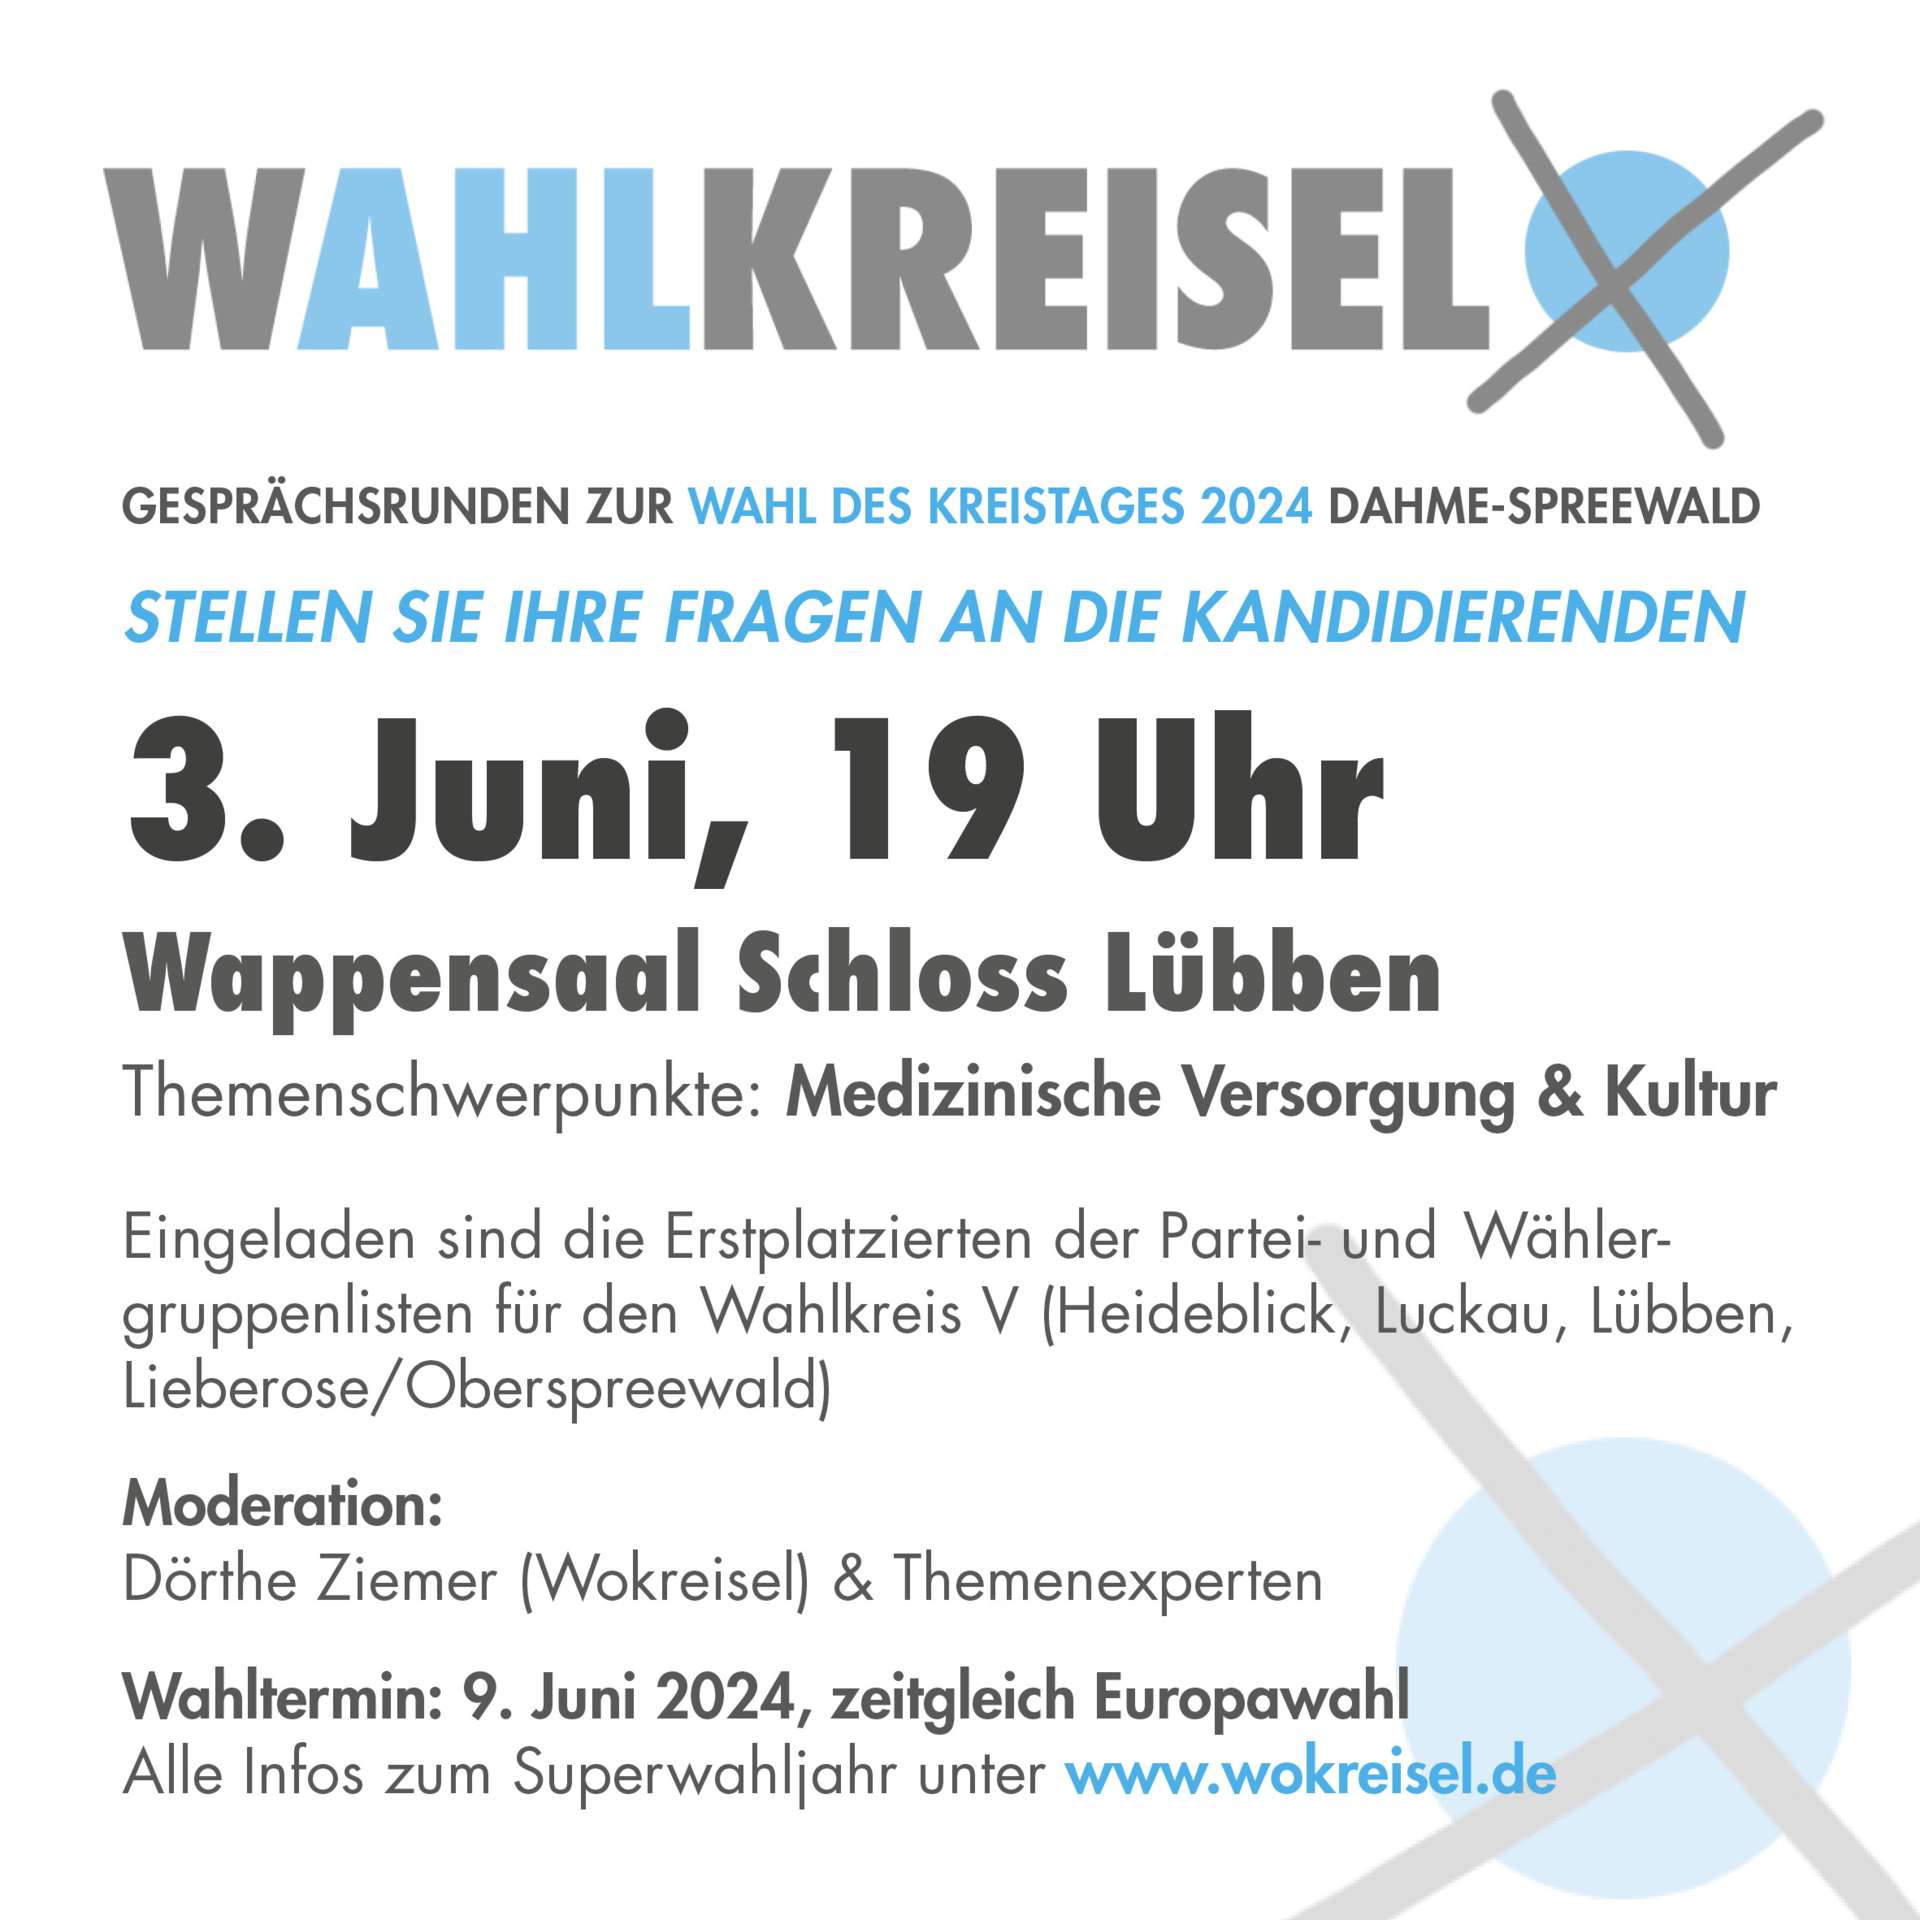 Wahlkreisel Nr. 5 in Lübben am 3. Juni, 19 Uhr, Wappensaal im Schloss - WK V (Lübben, Luckau, Heidblick, Lieberose/Oberspreewald)